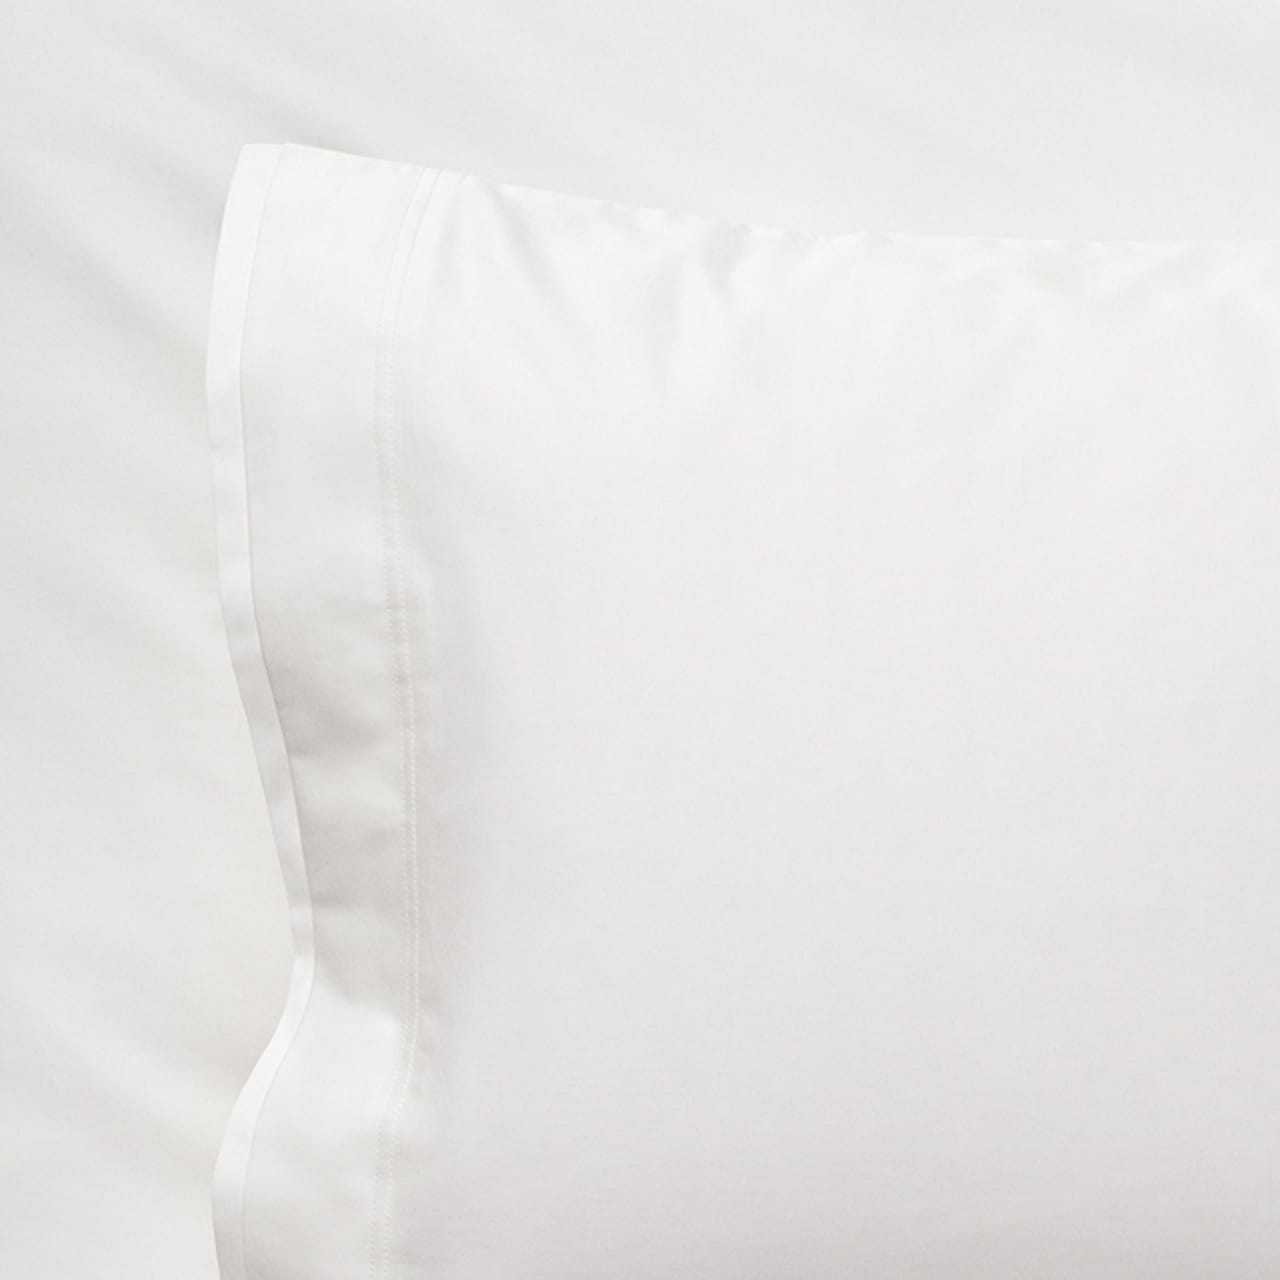 Classic Pillowcase 50x60 Ogland White